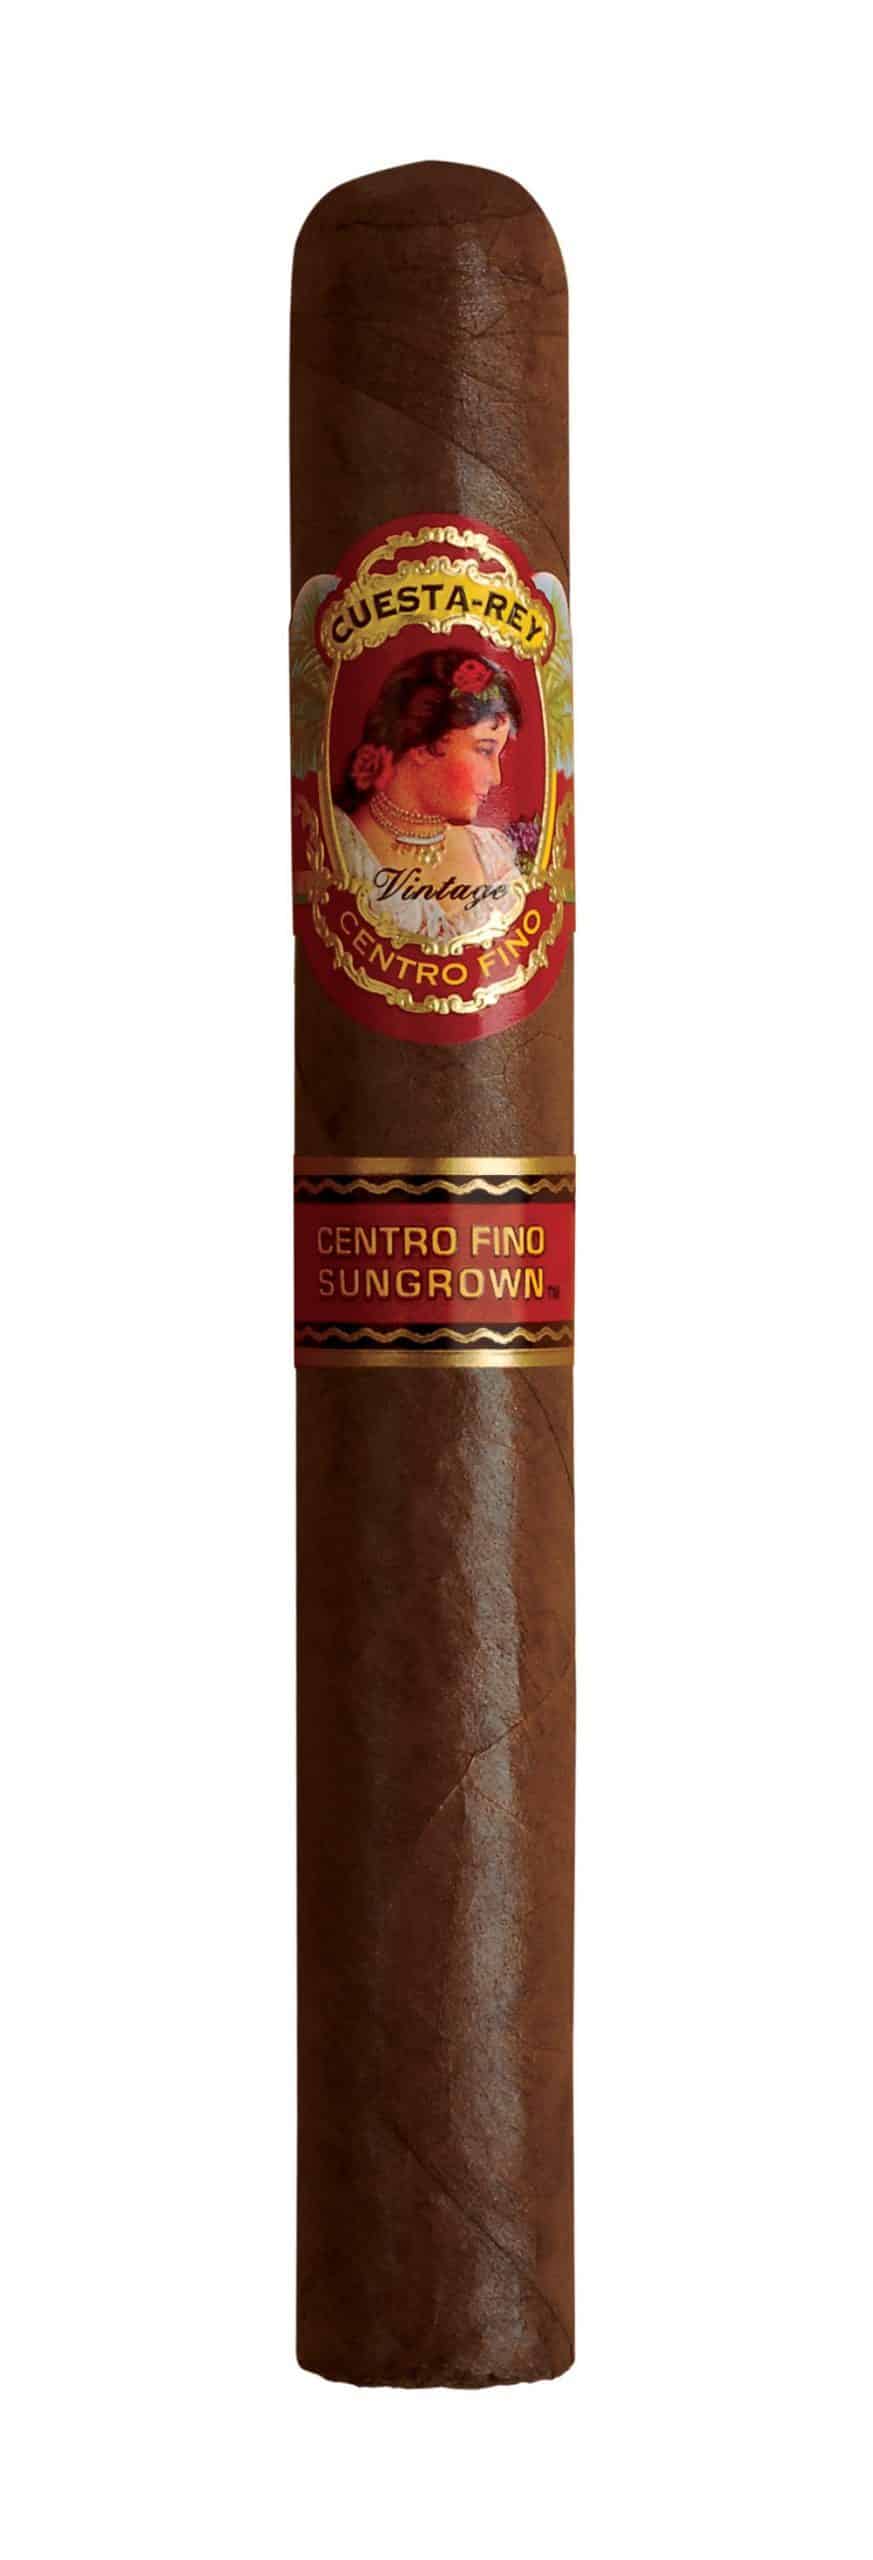 cuesta rey centro fino number 60 single cigar